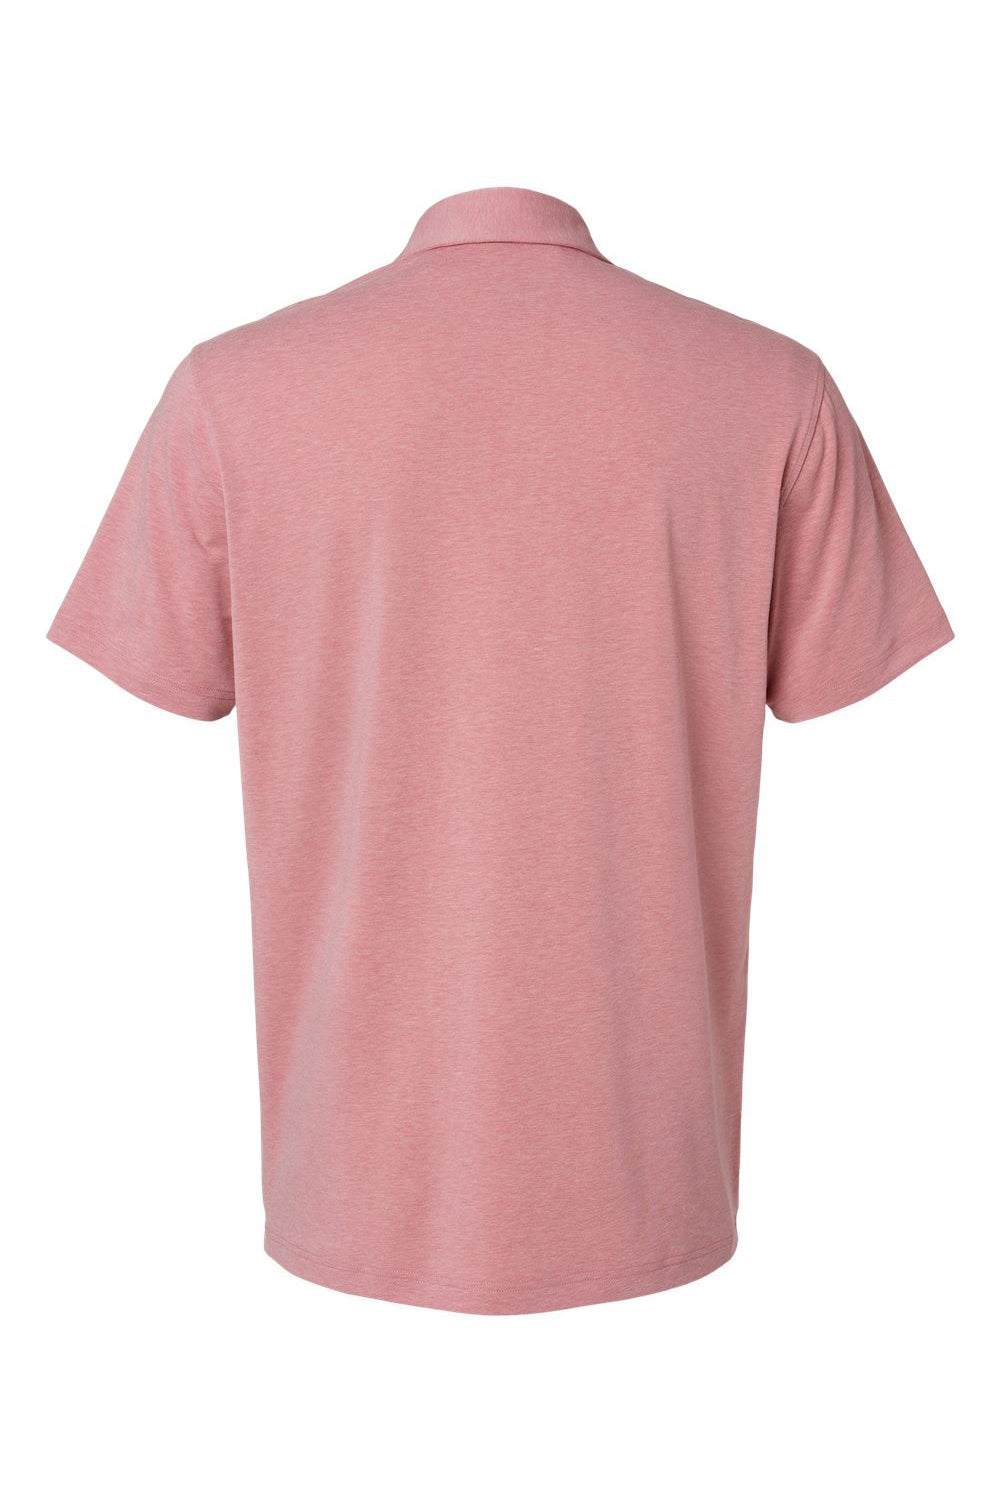 Adidas A590 Mens Short Sleeve Polo Shirt Pink Strata Melange Flat Back